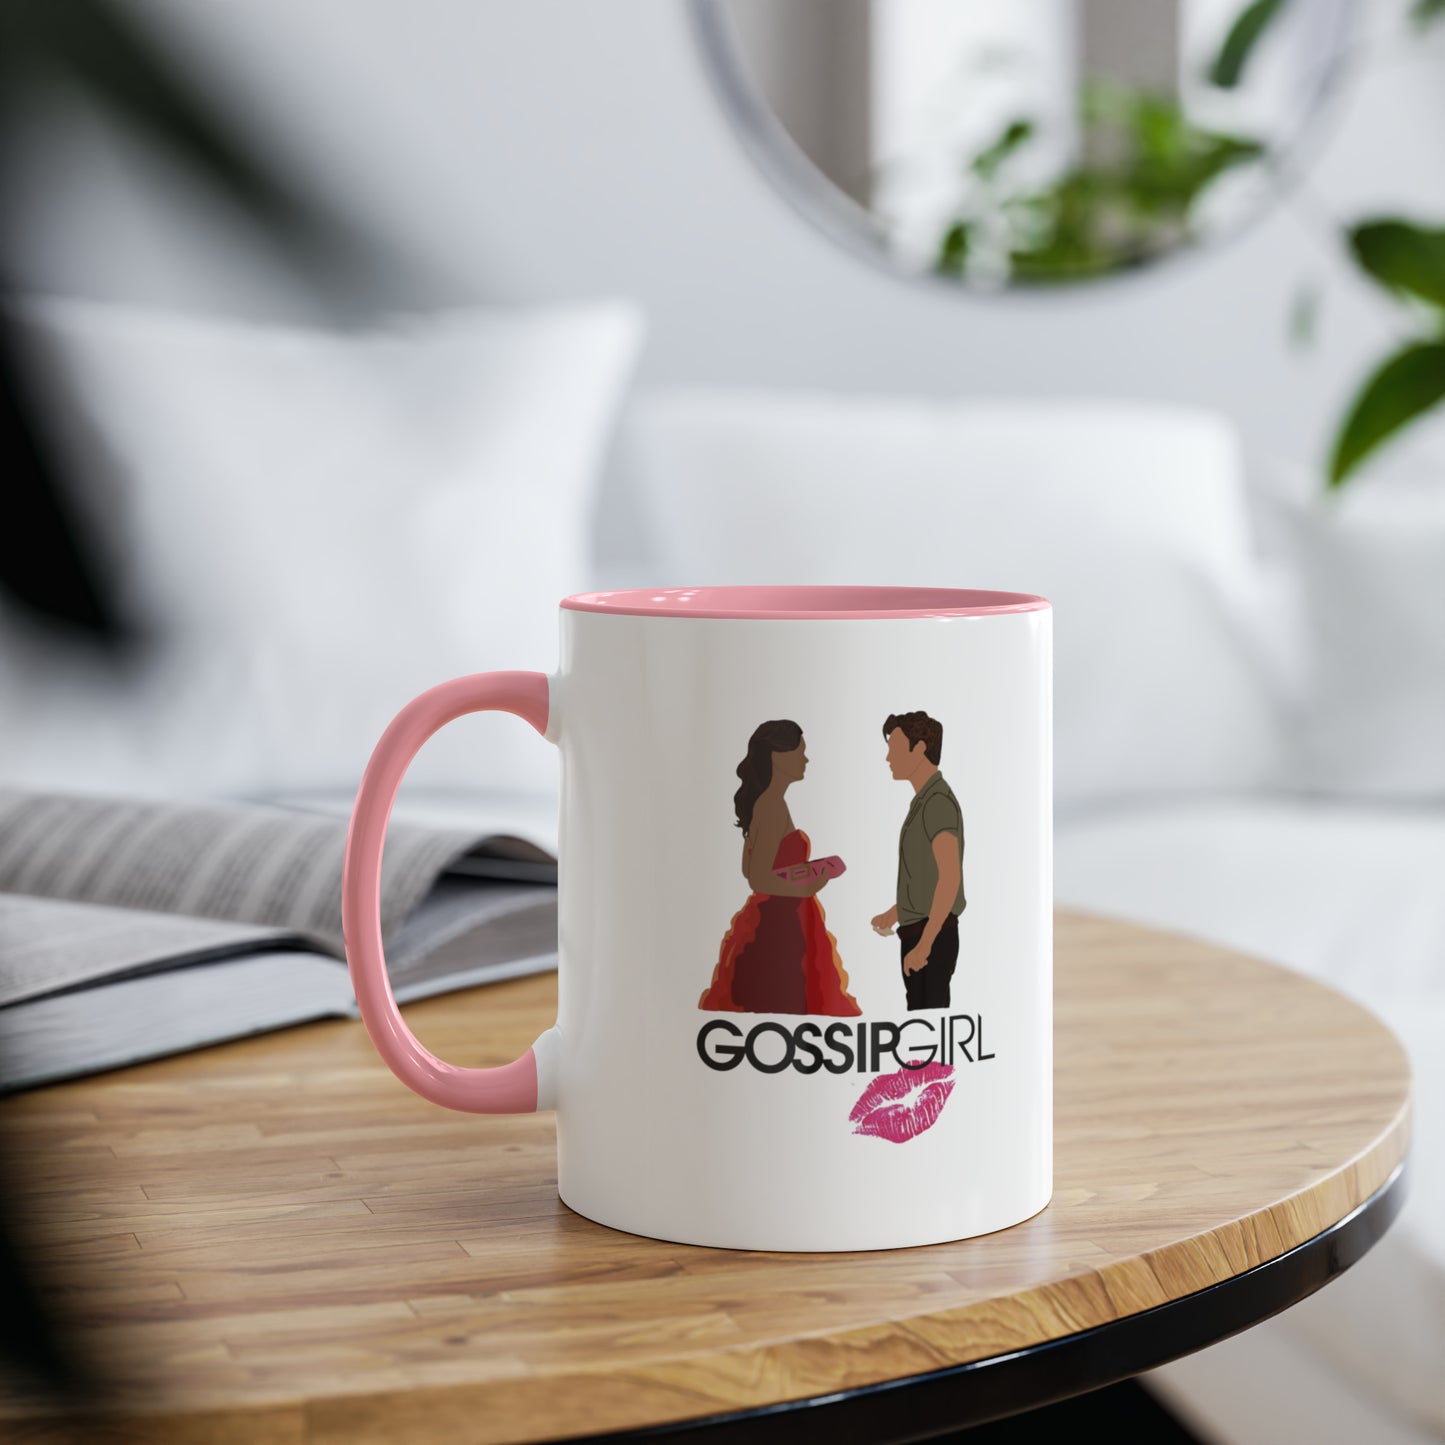 Chuck and Blair XOXO Gossip Girl / Gossip Girl Mug